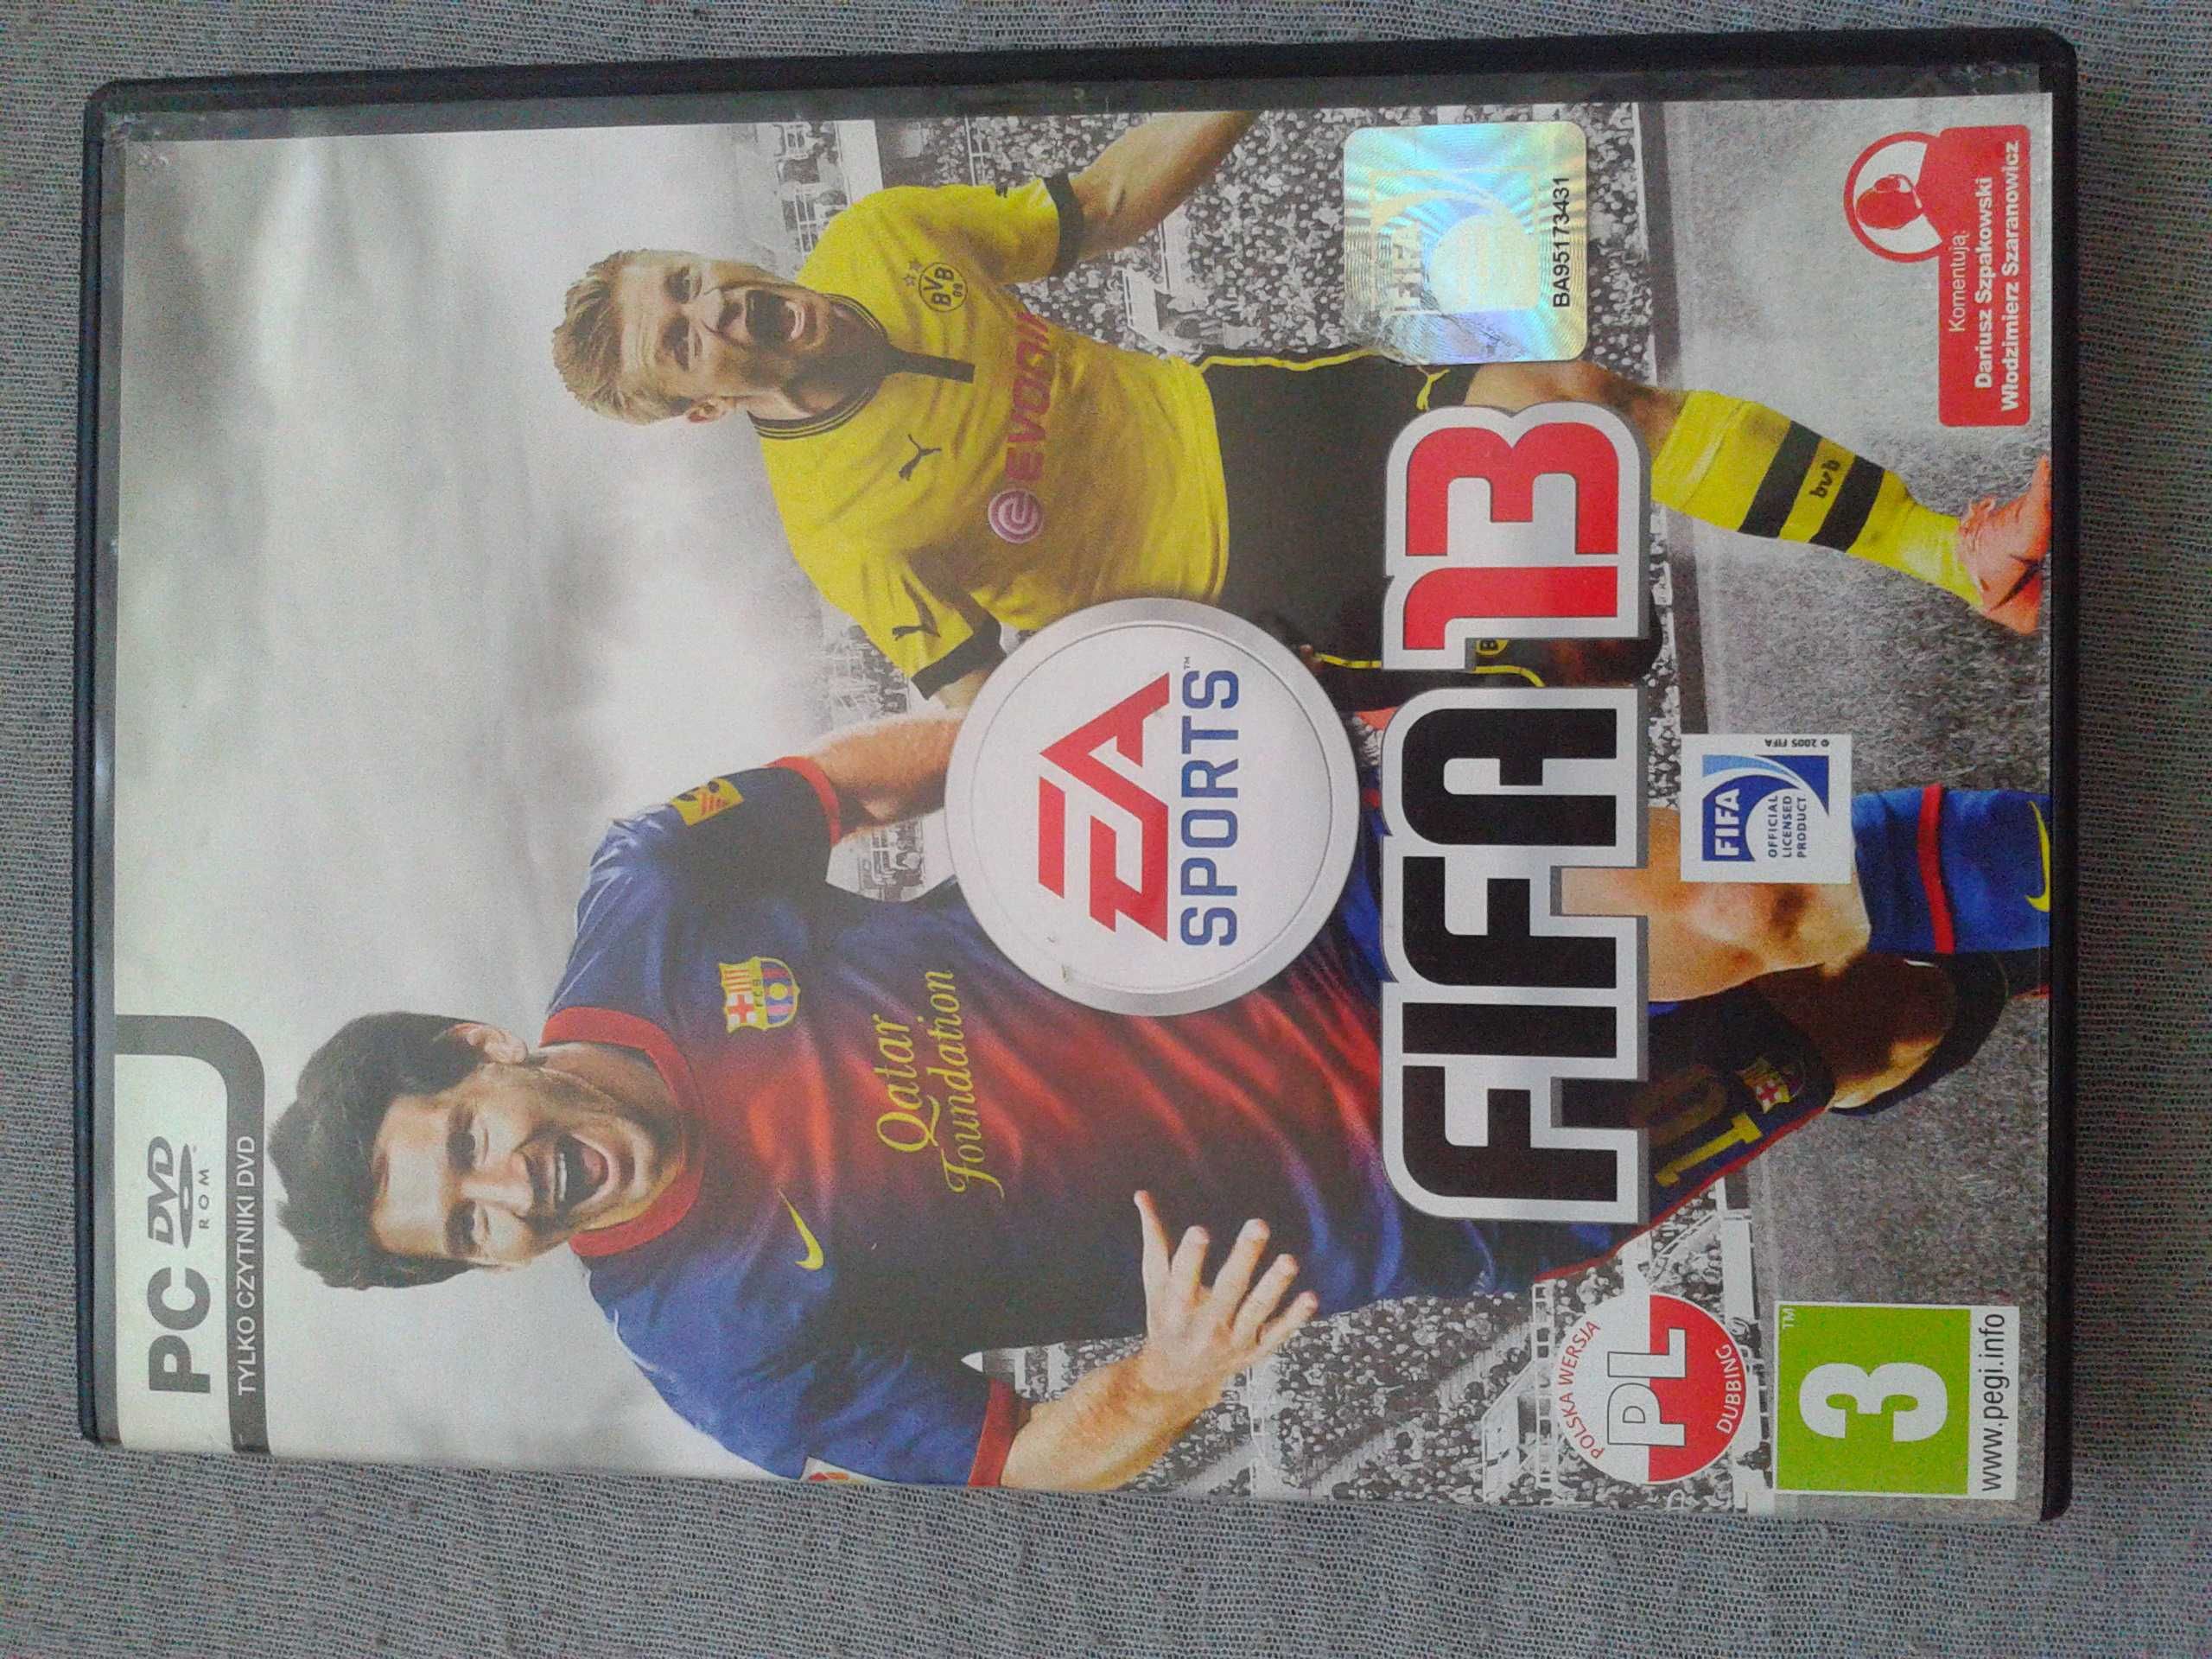 FIFA 13       PC